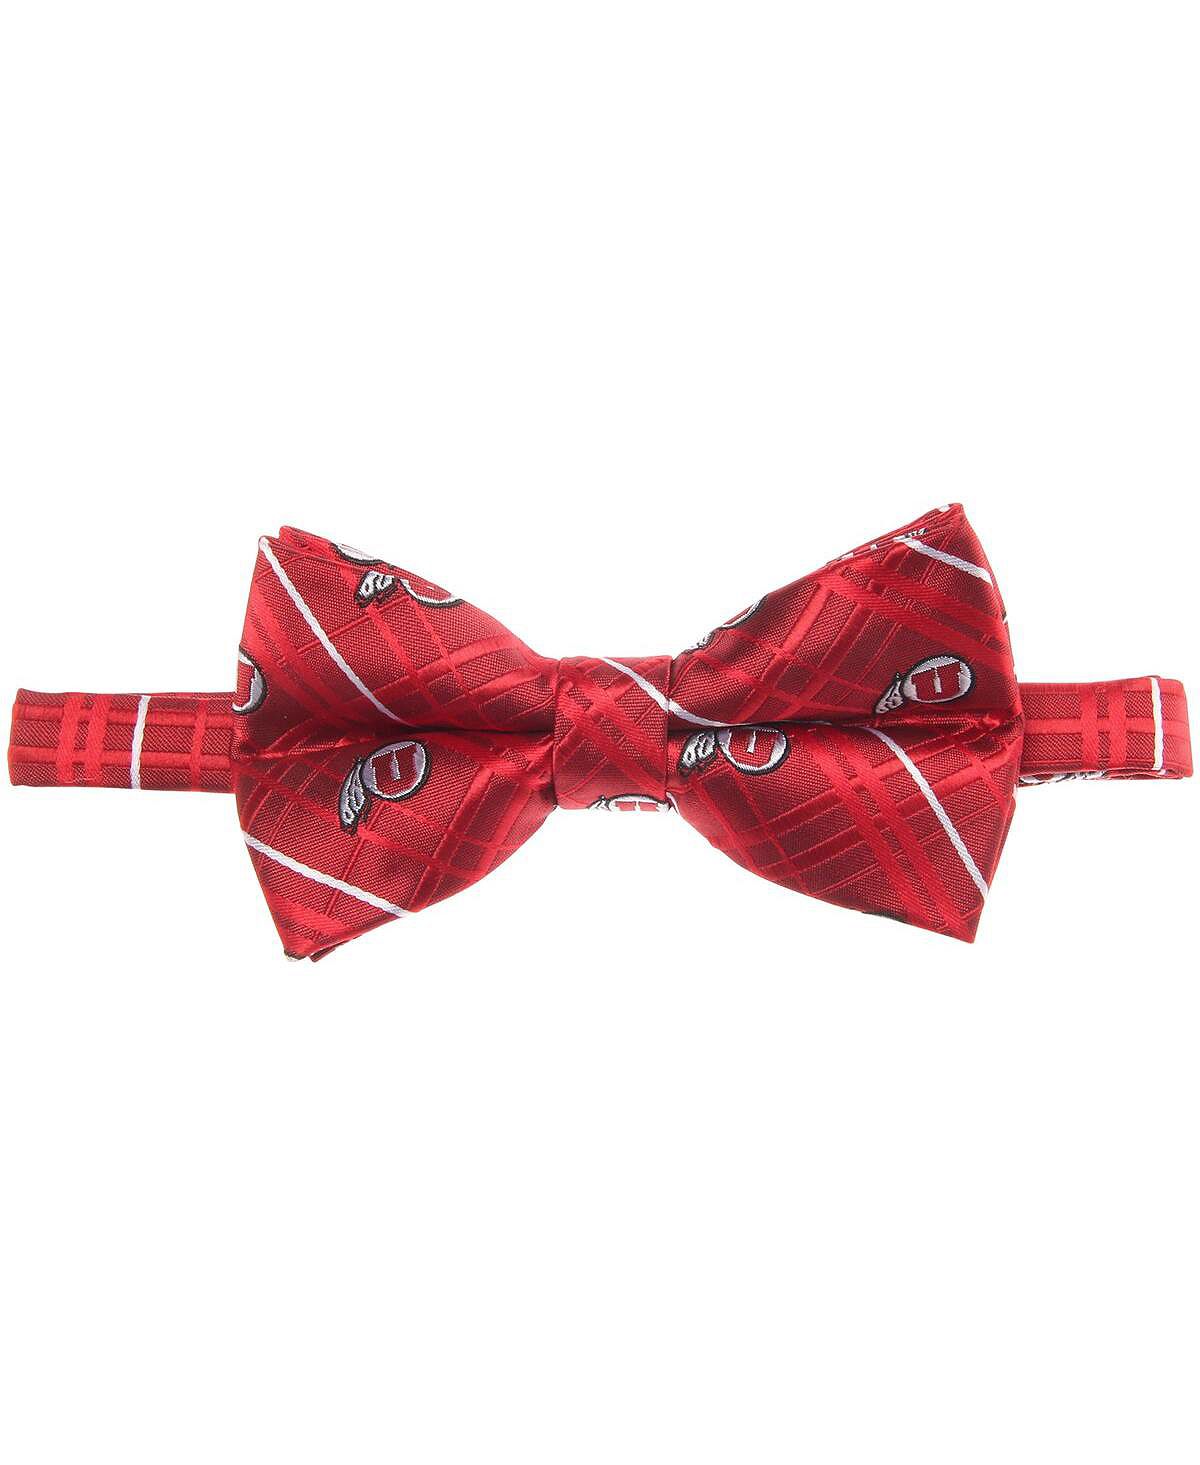 Мужской красный галстук-бабочка Utah Utes Oxford Eagles Wings юта юта кстати colour